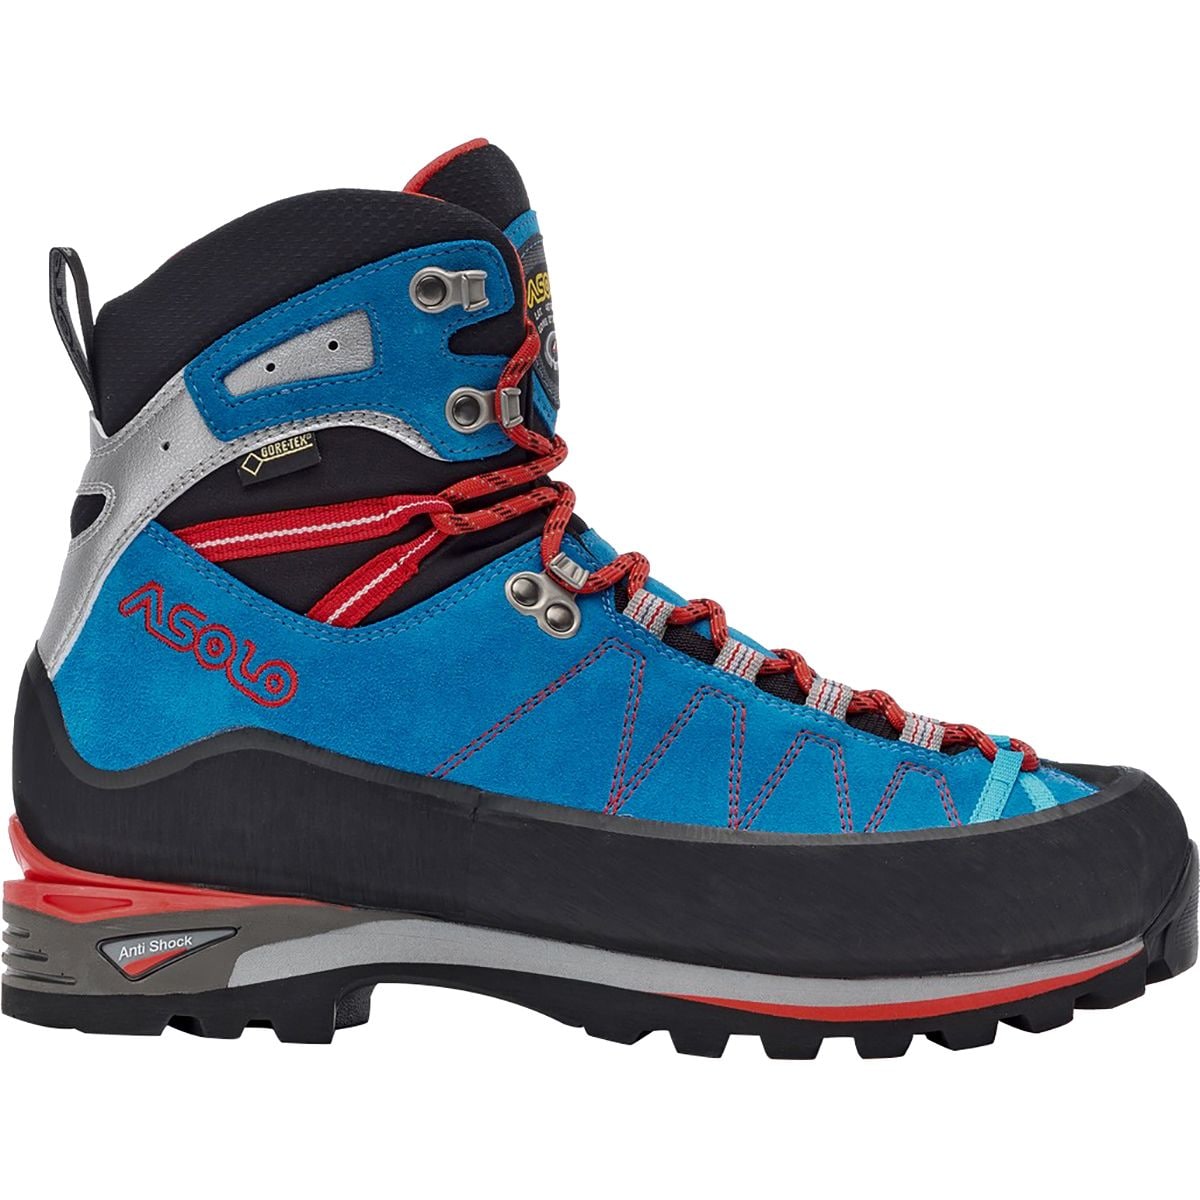 Elbrus GV Mountaineering Boot - Men